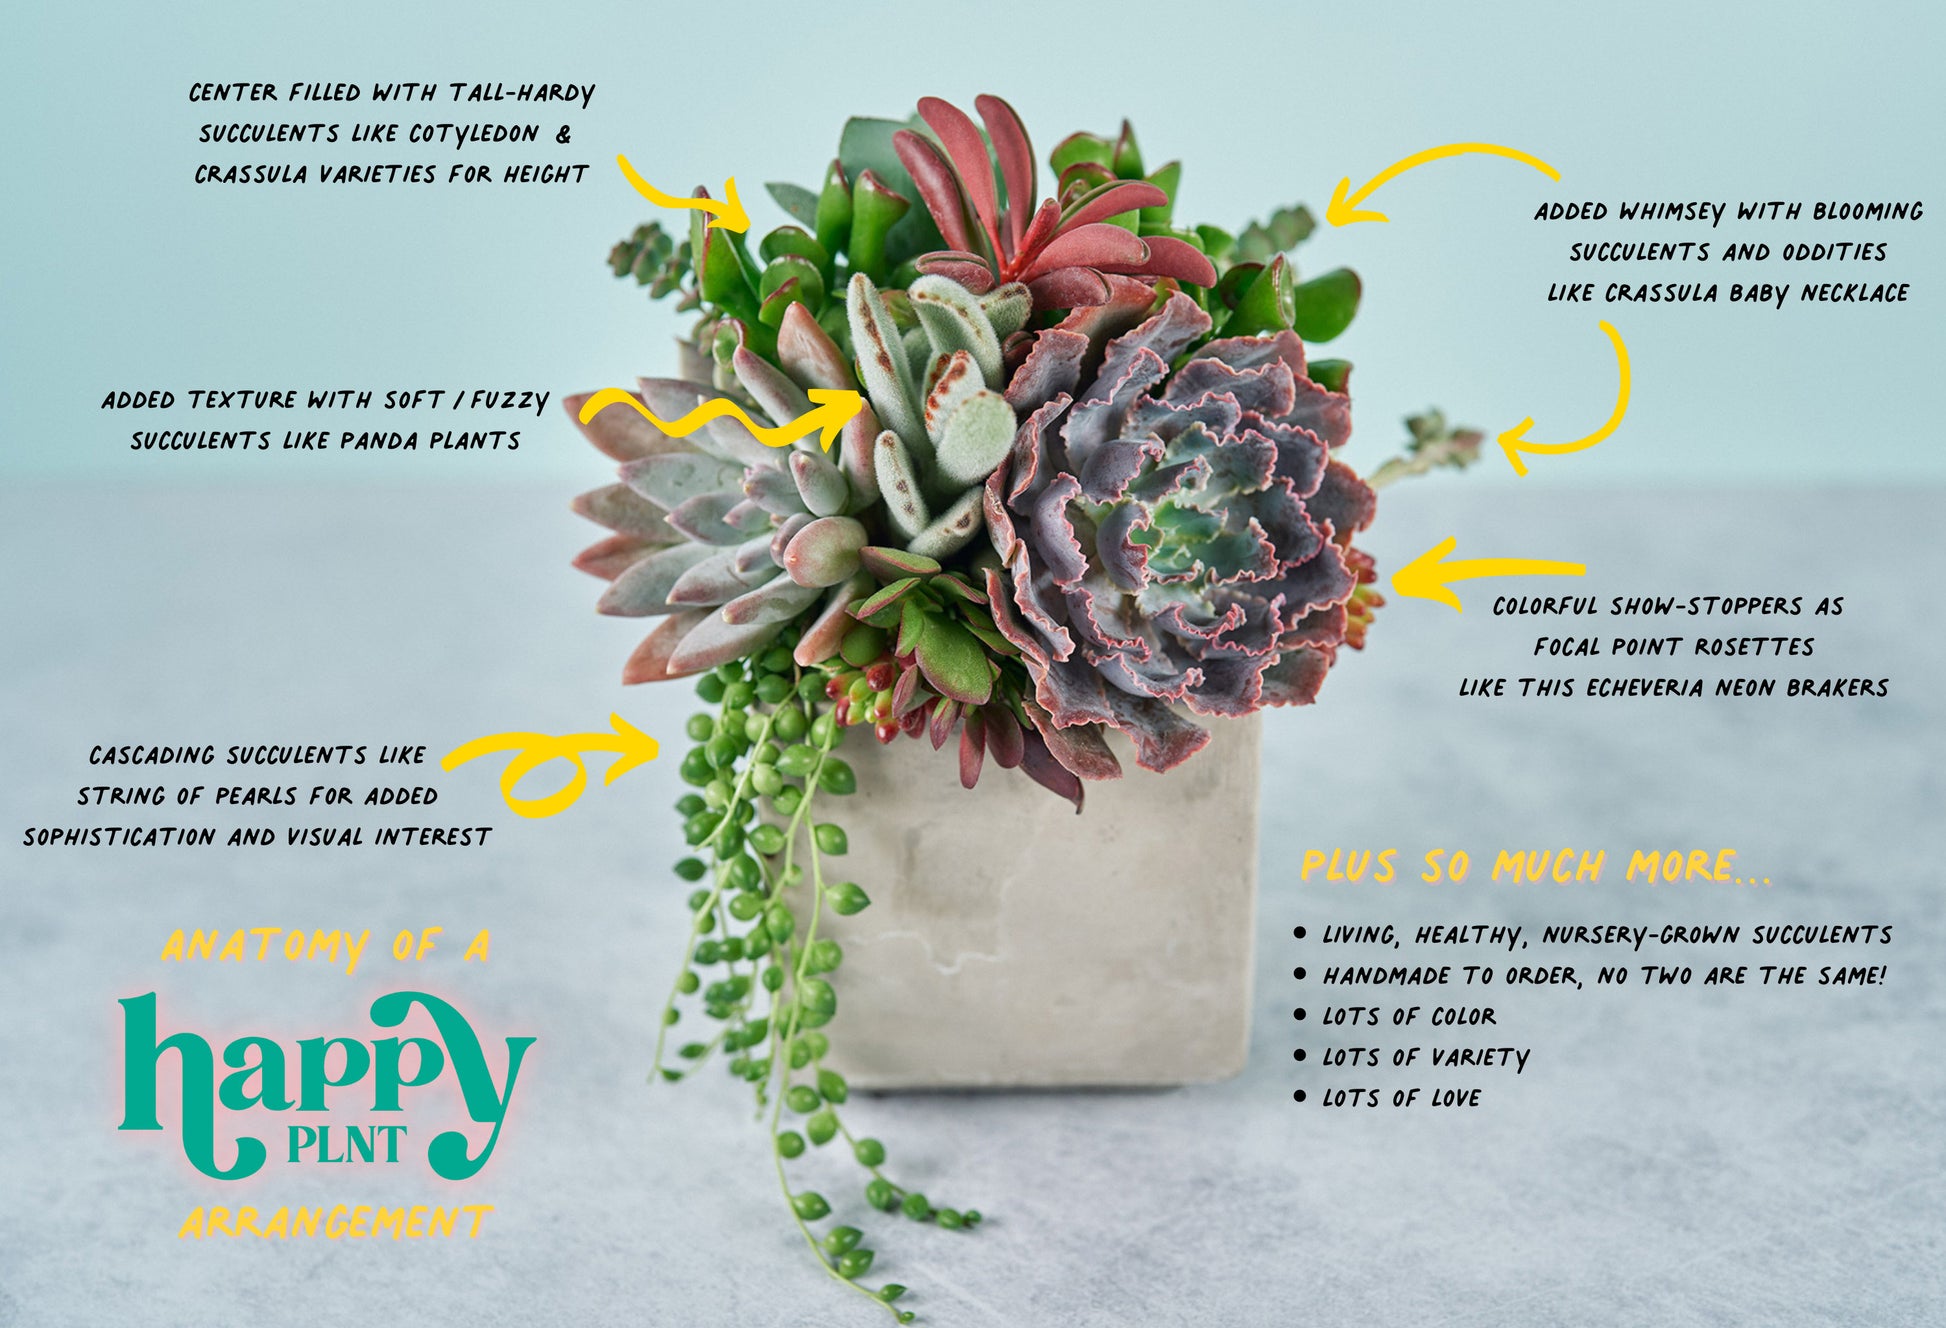 Silver Swirl Succulent Arrangement Planter: Modern Living Succulent Gift, Centerpiece for Weddings & Events, Anniversary Gift